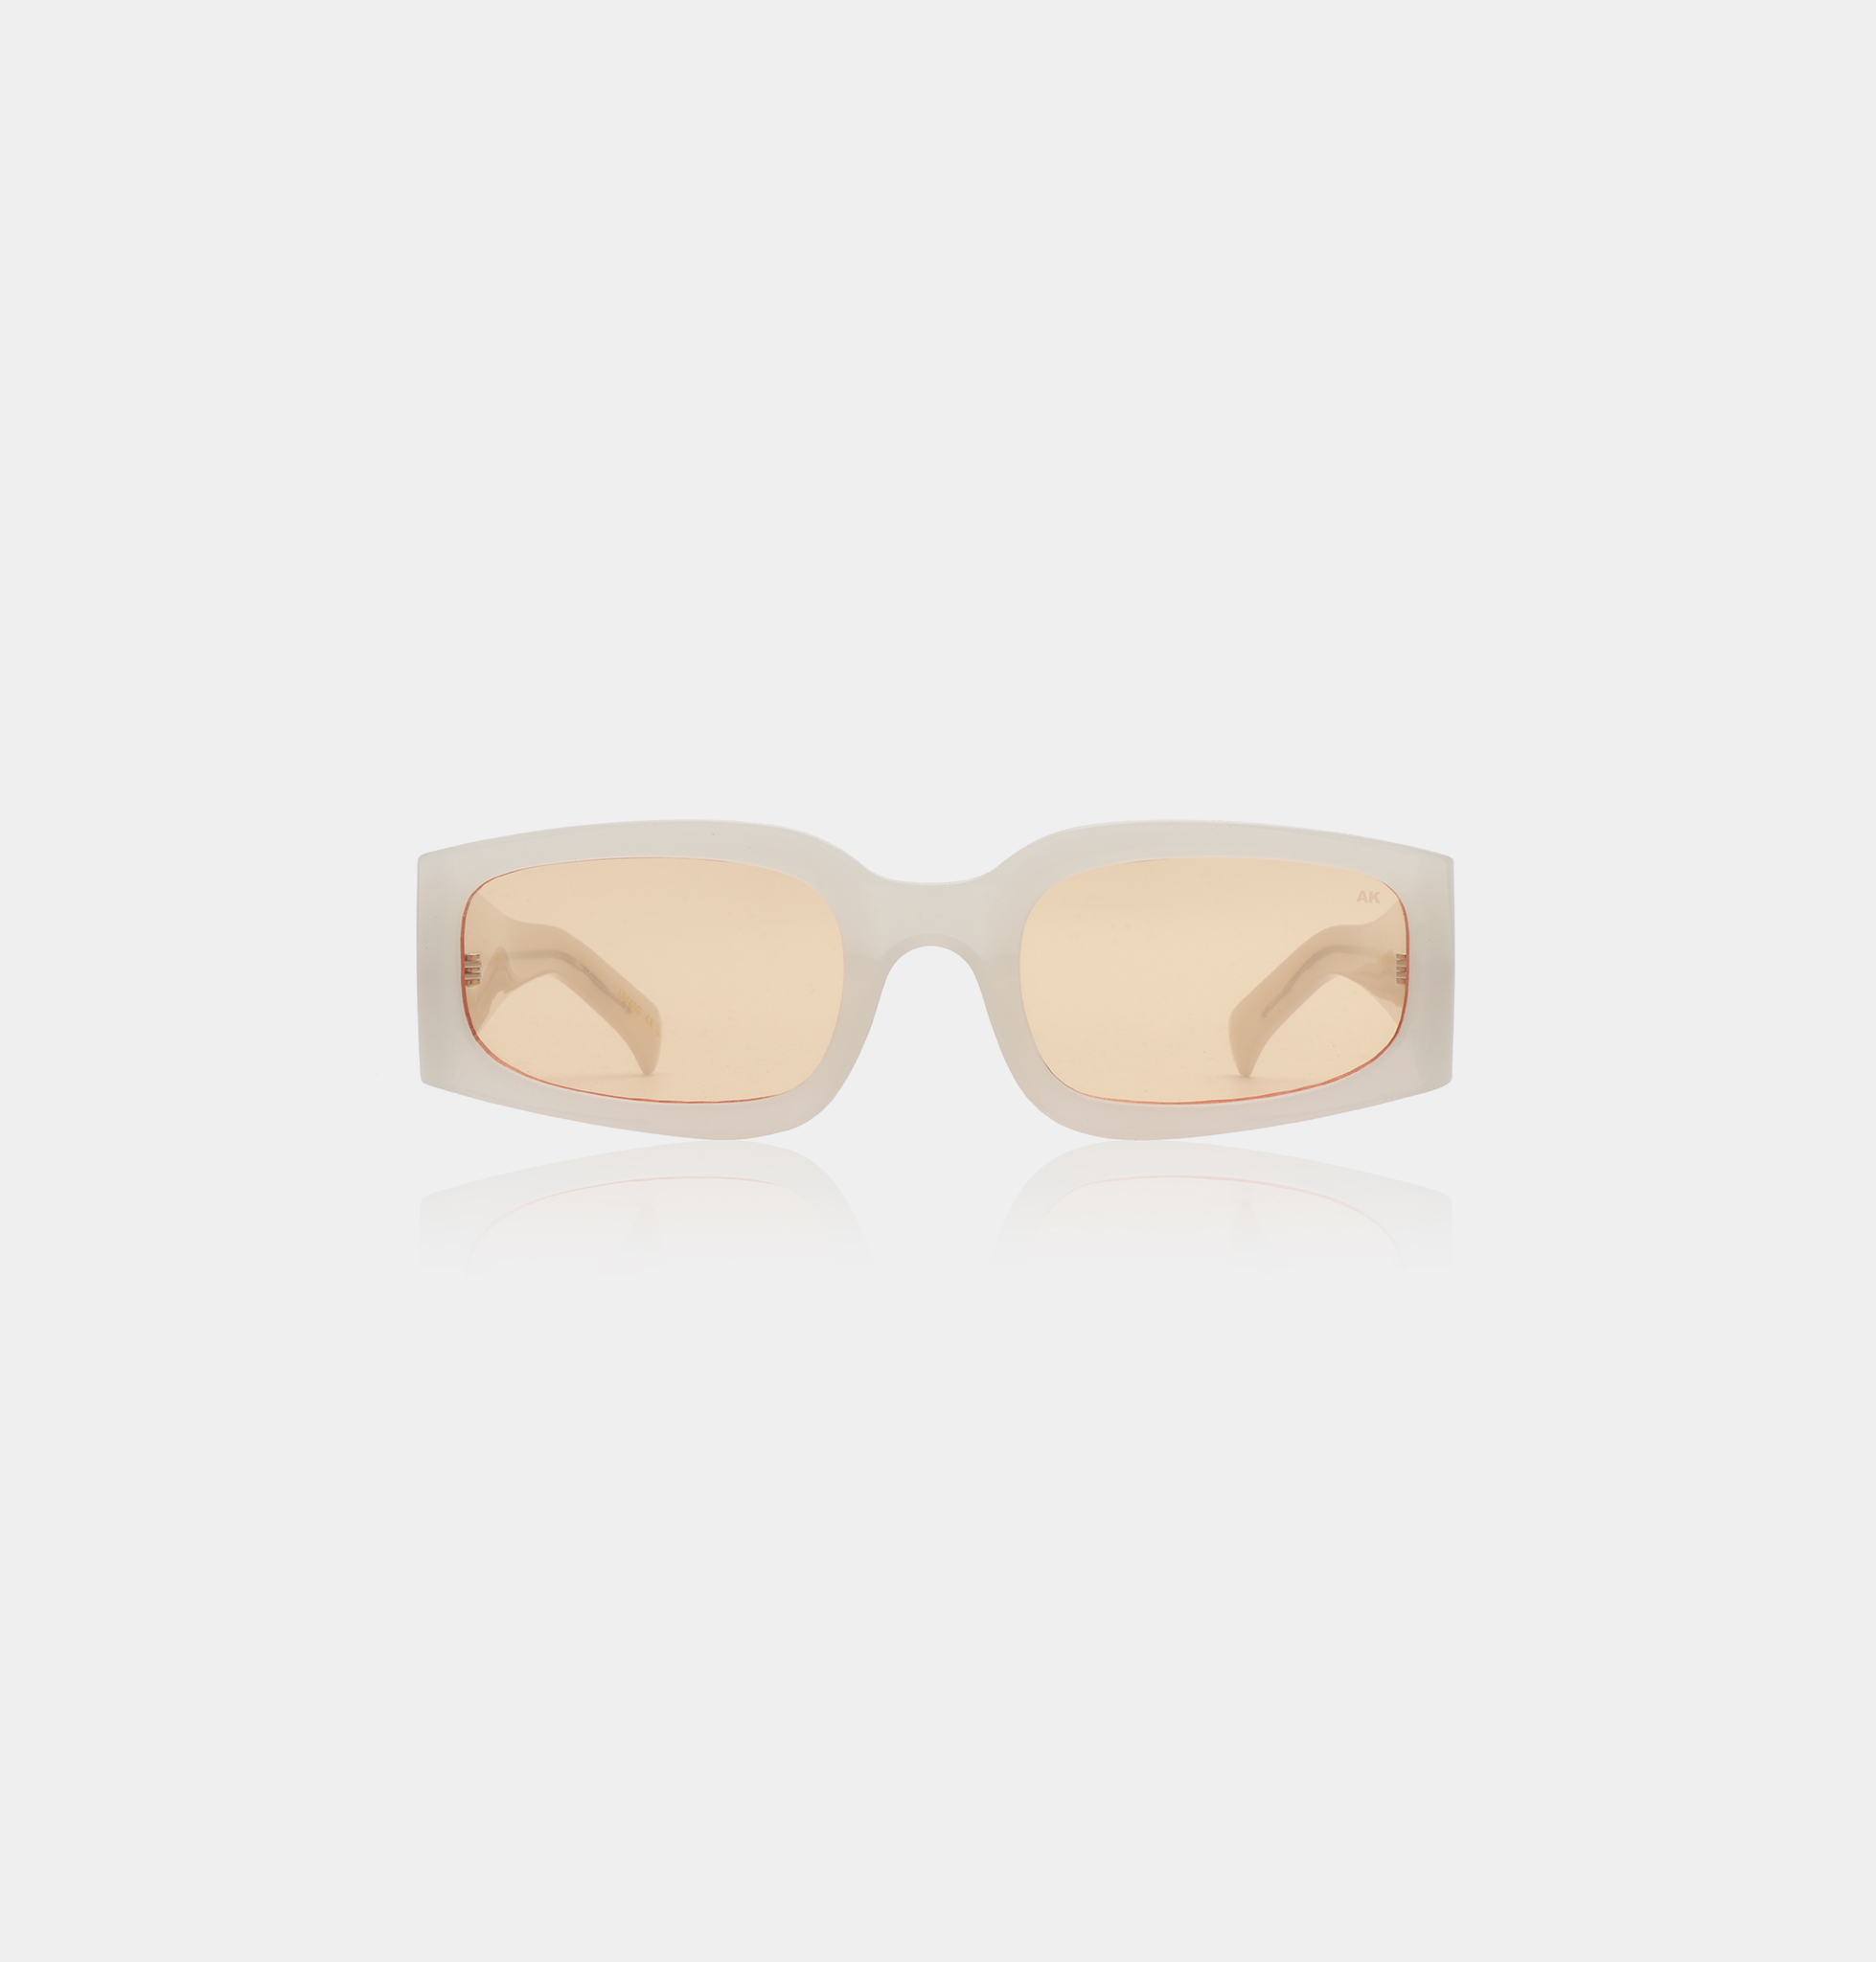 A.Kjaerbede zonnebril model ALEX kleur WIT met PERZIK glazen AKsunnies bril sunglasses eyewear